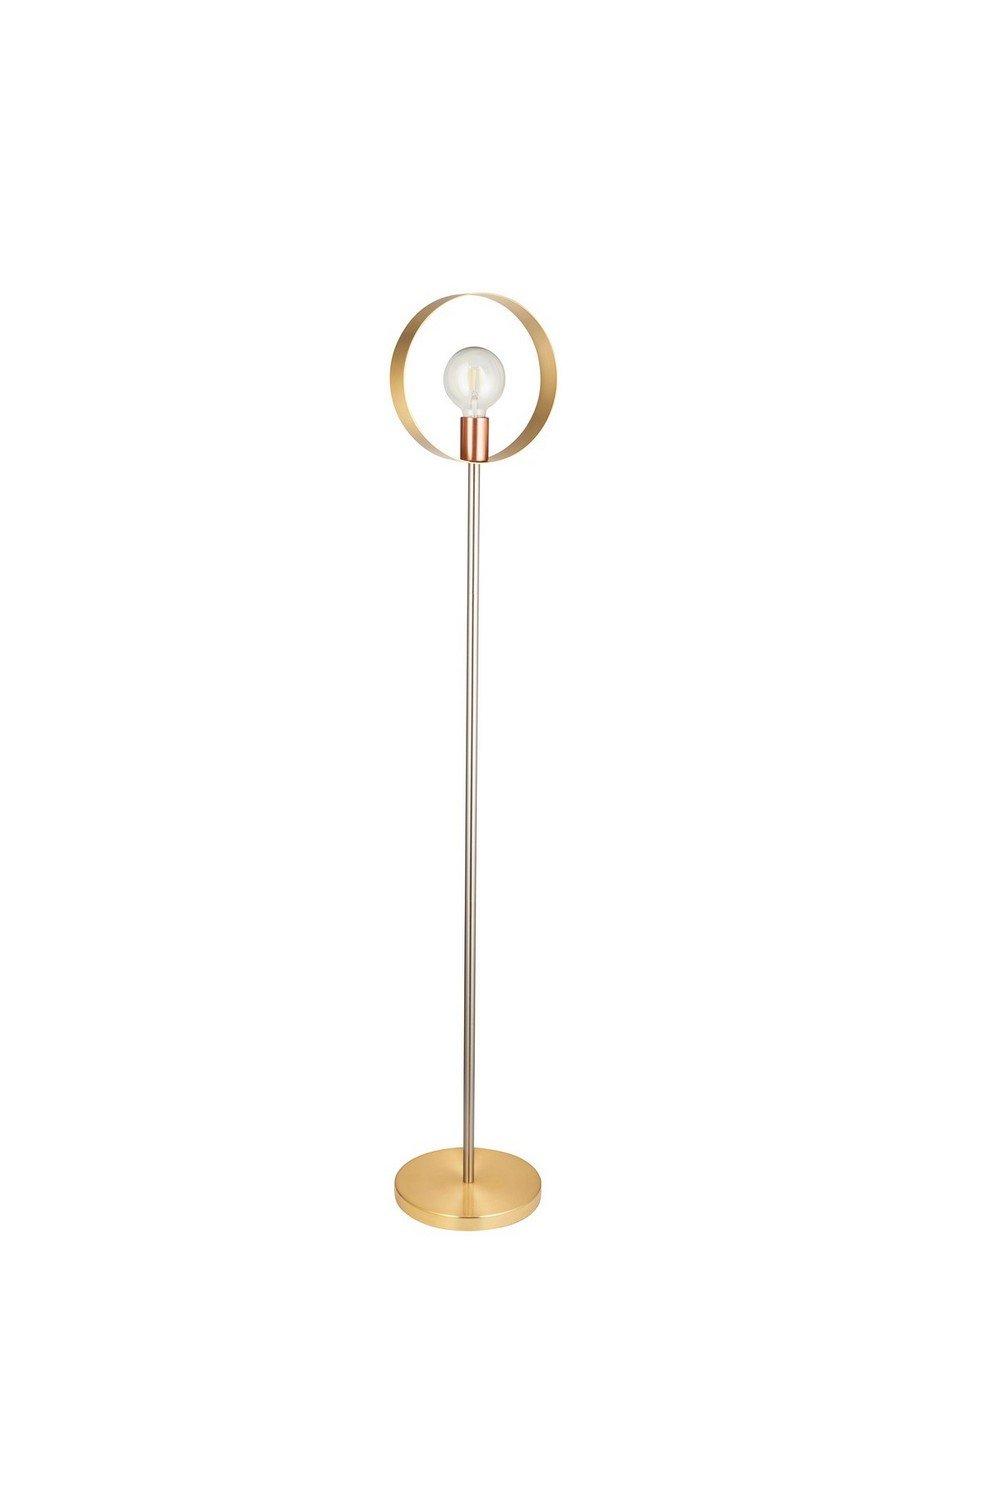 Hoop Complete Floor Lamp Brushed Brass Nickel Copper Plate